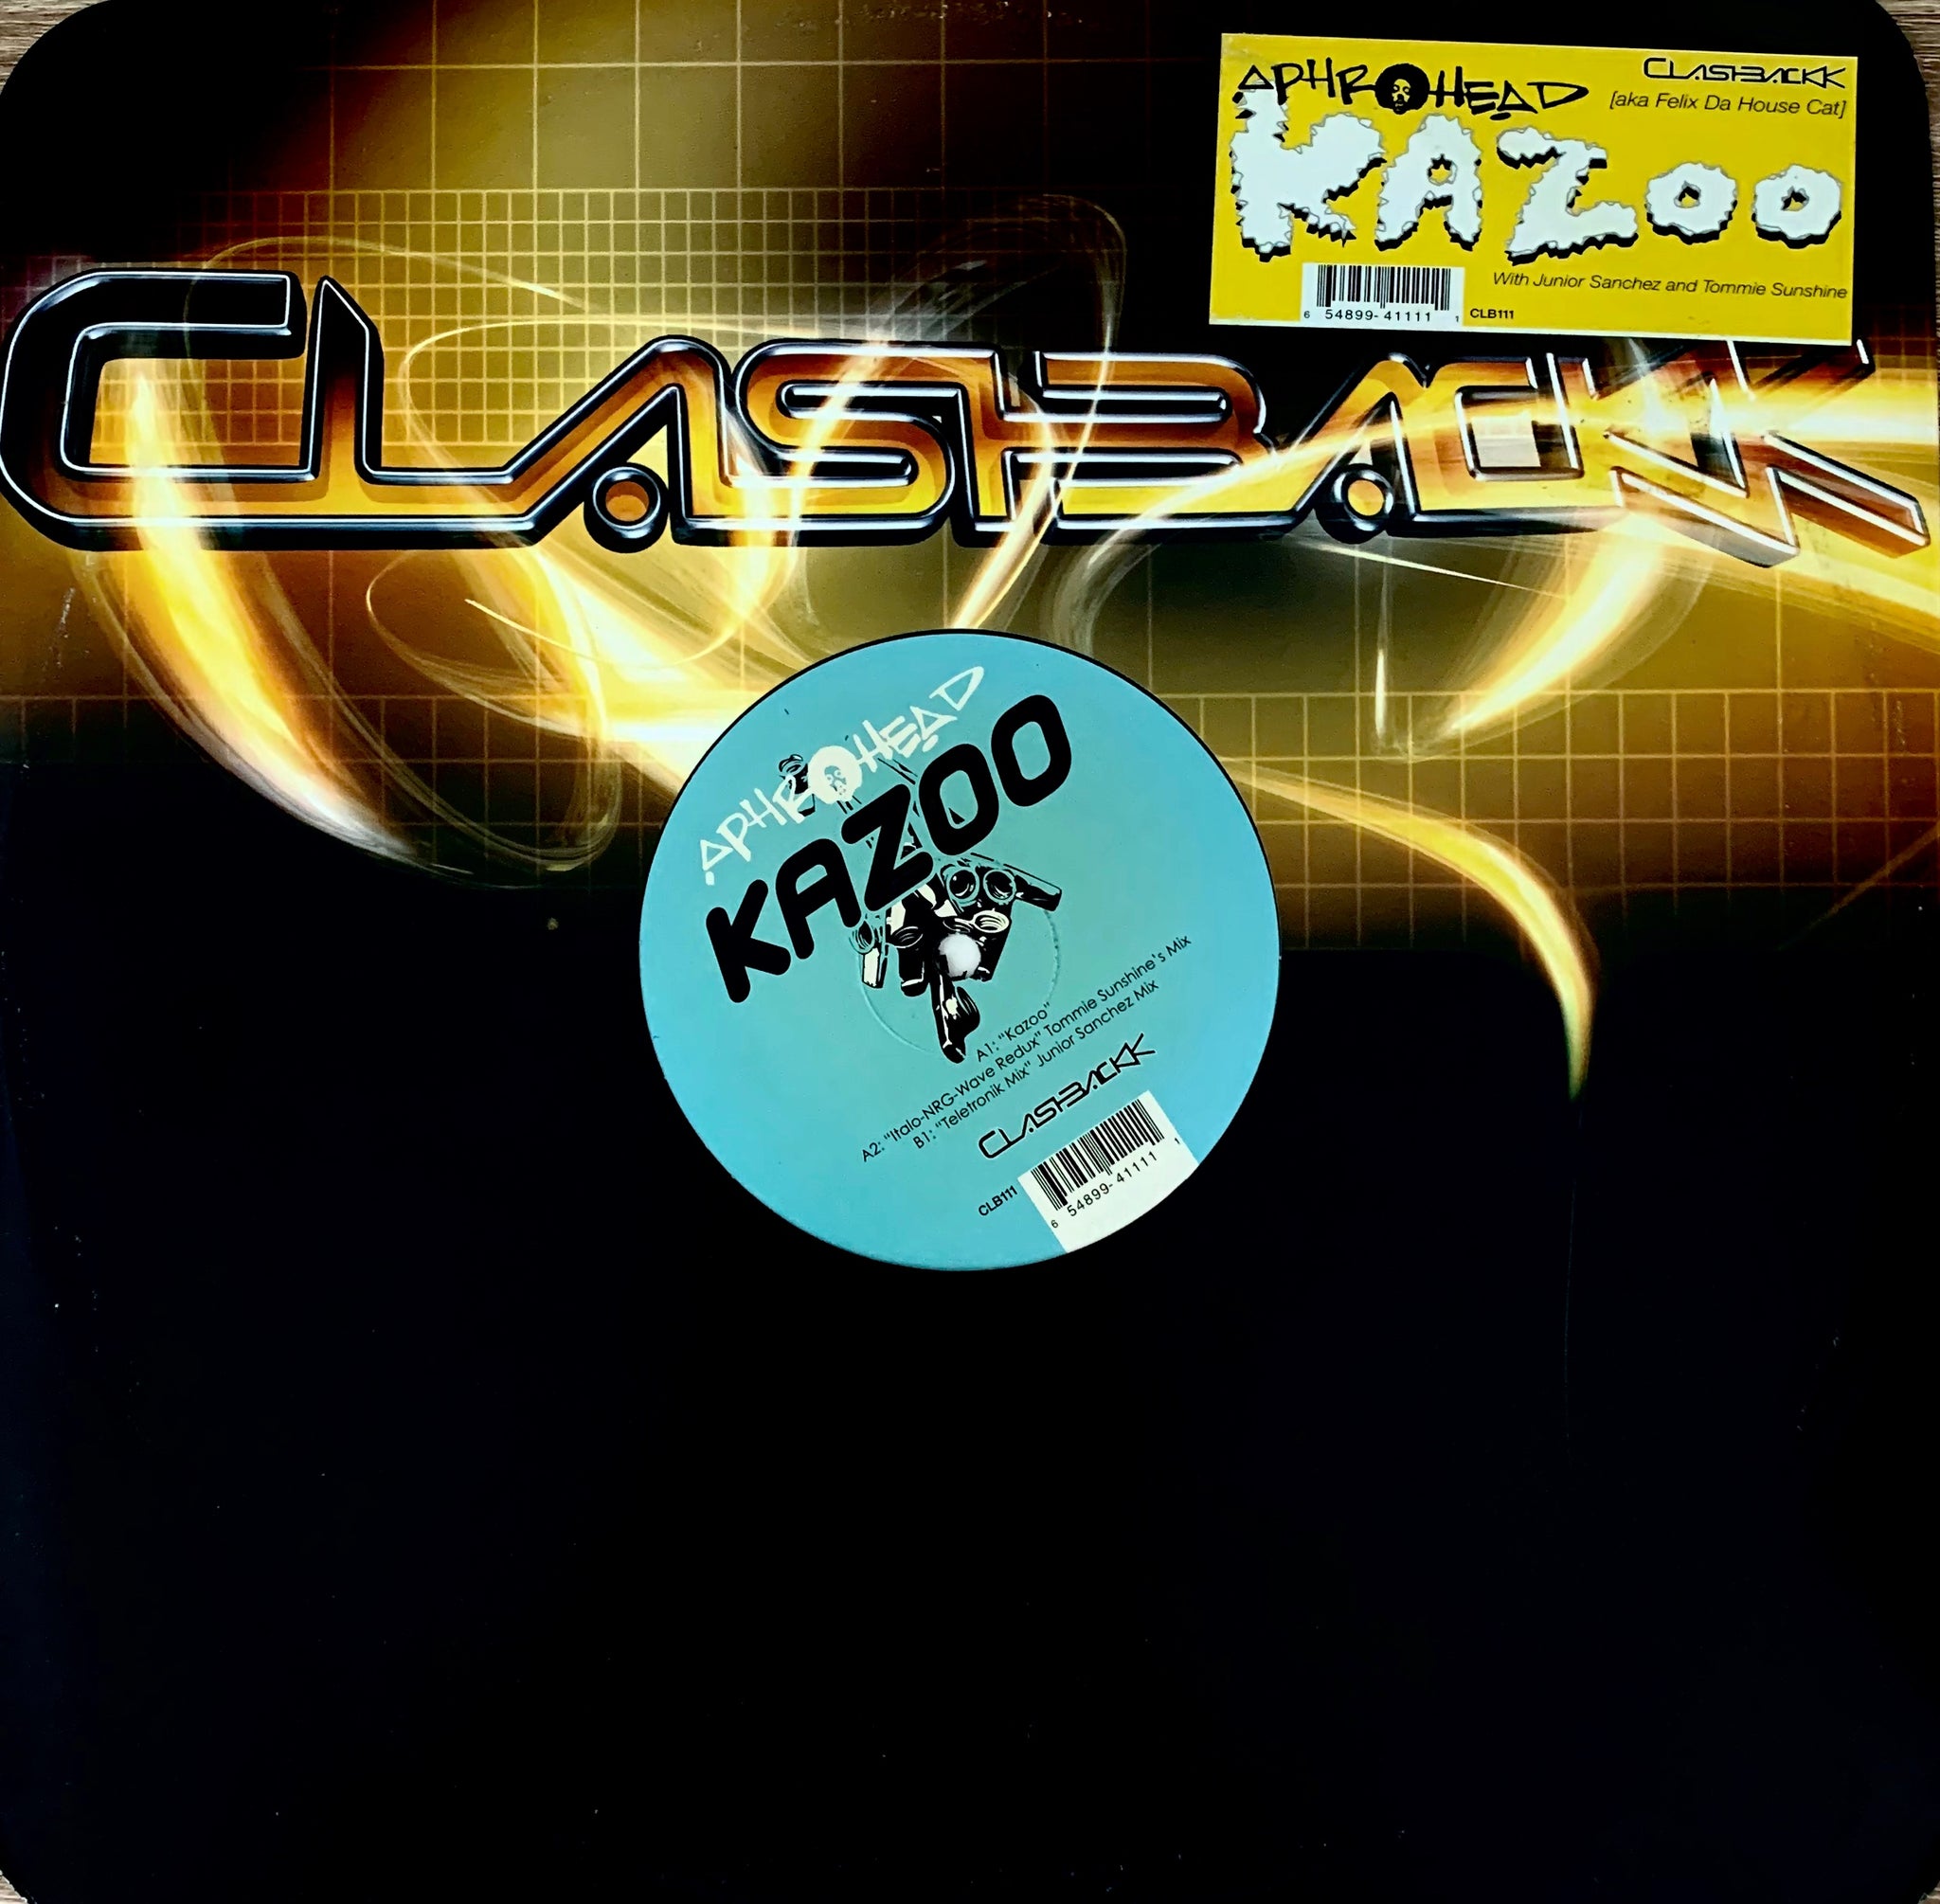 Aphrohead ‎– Kazoo